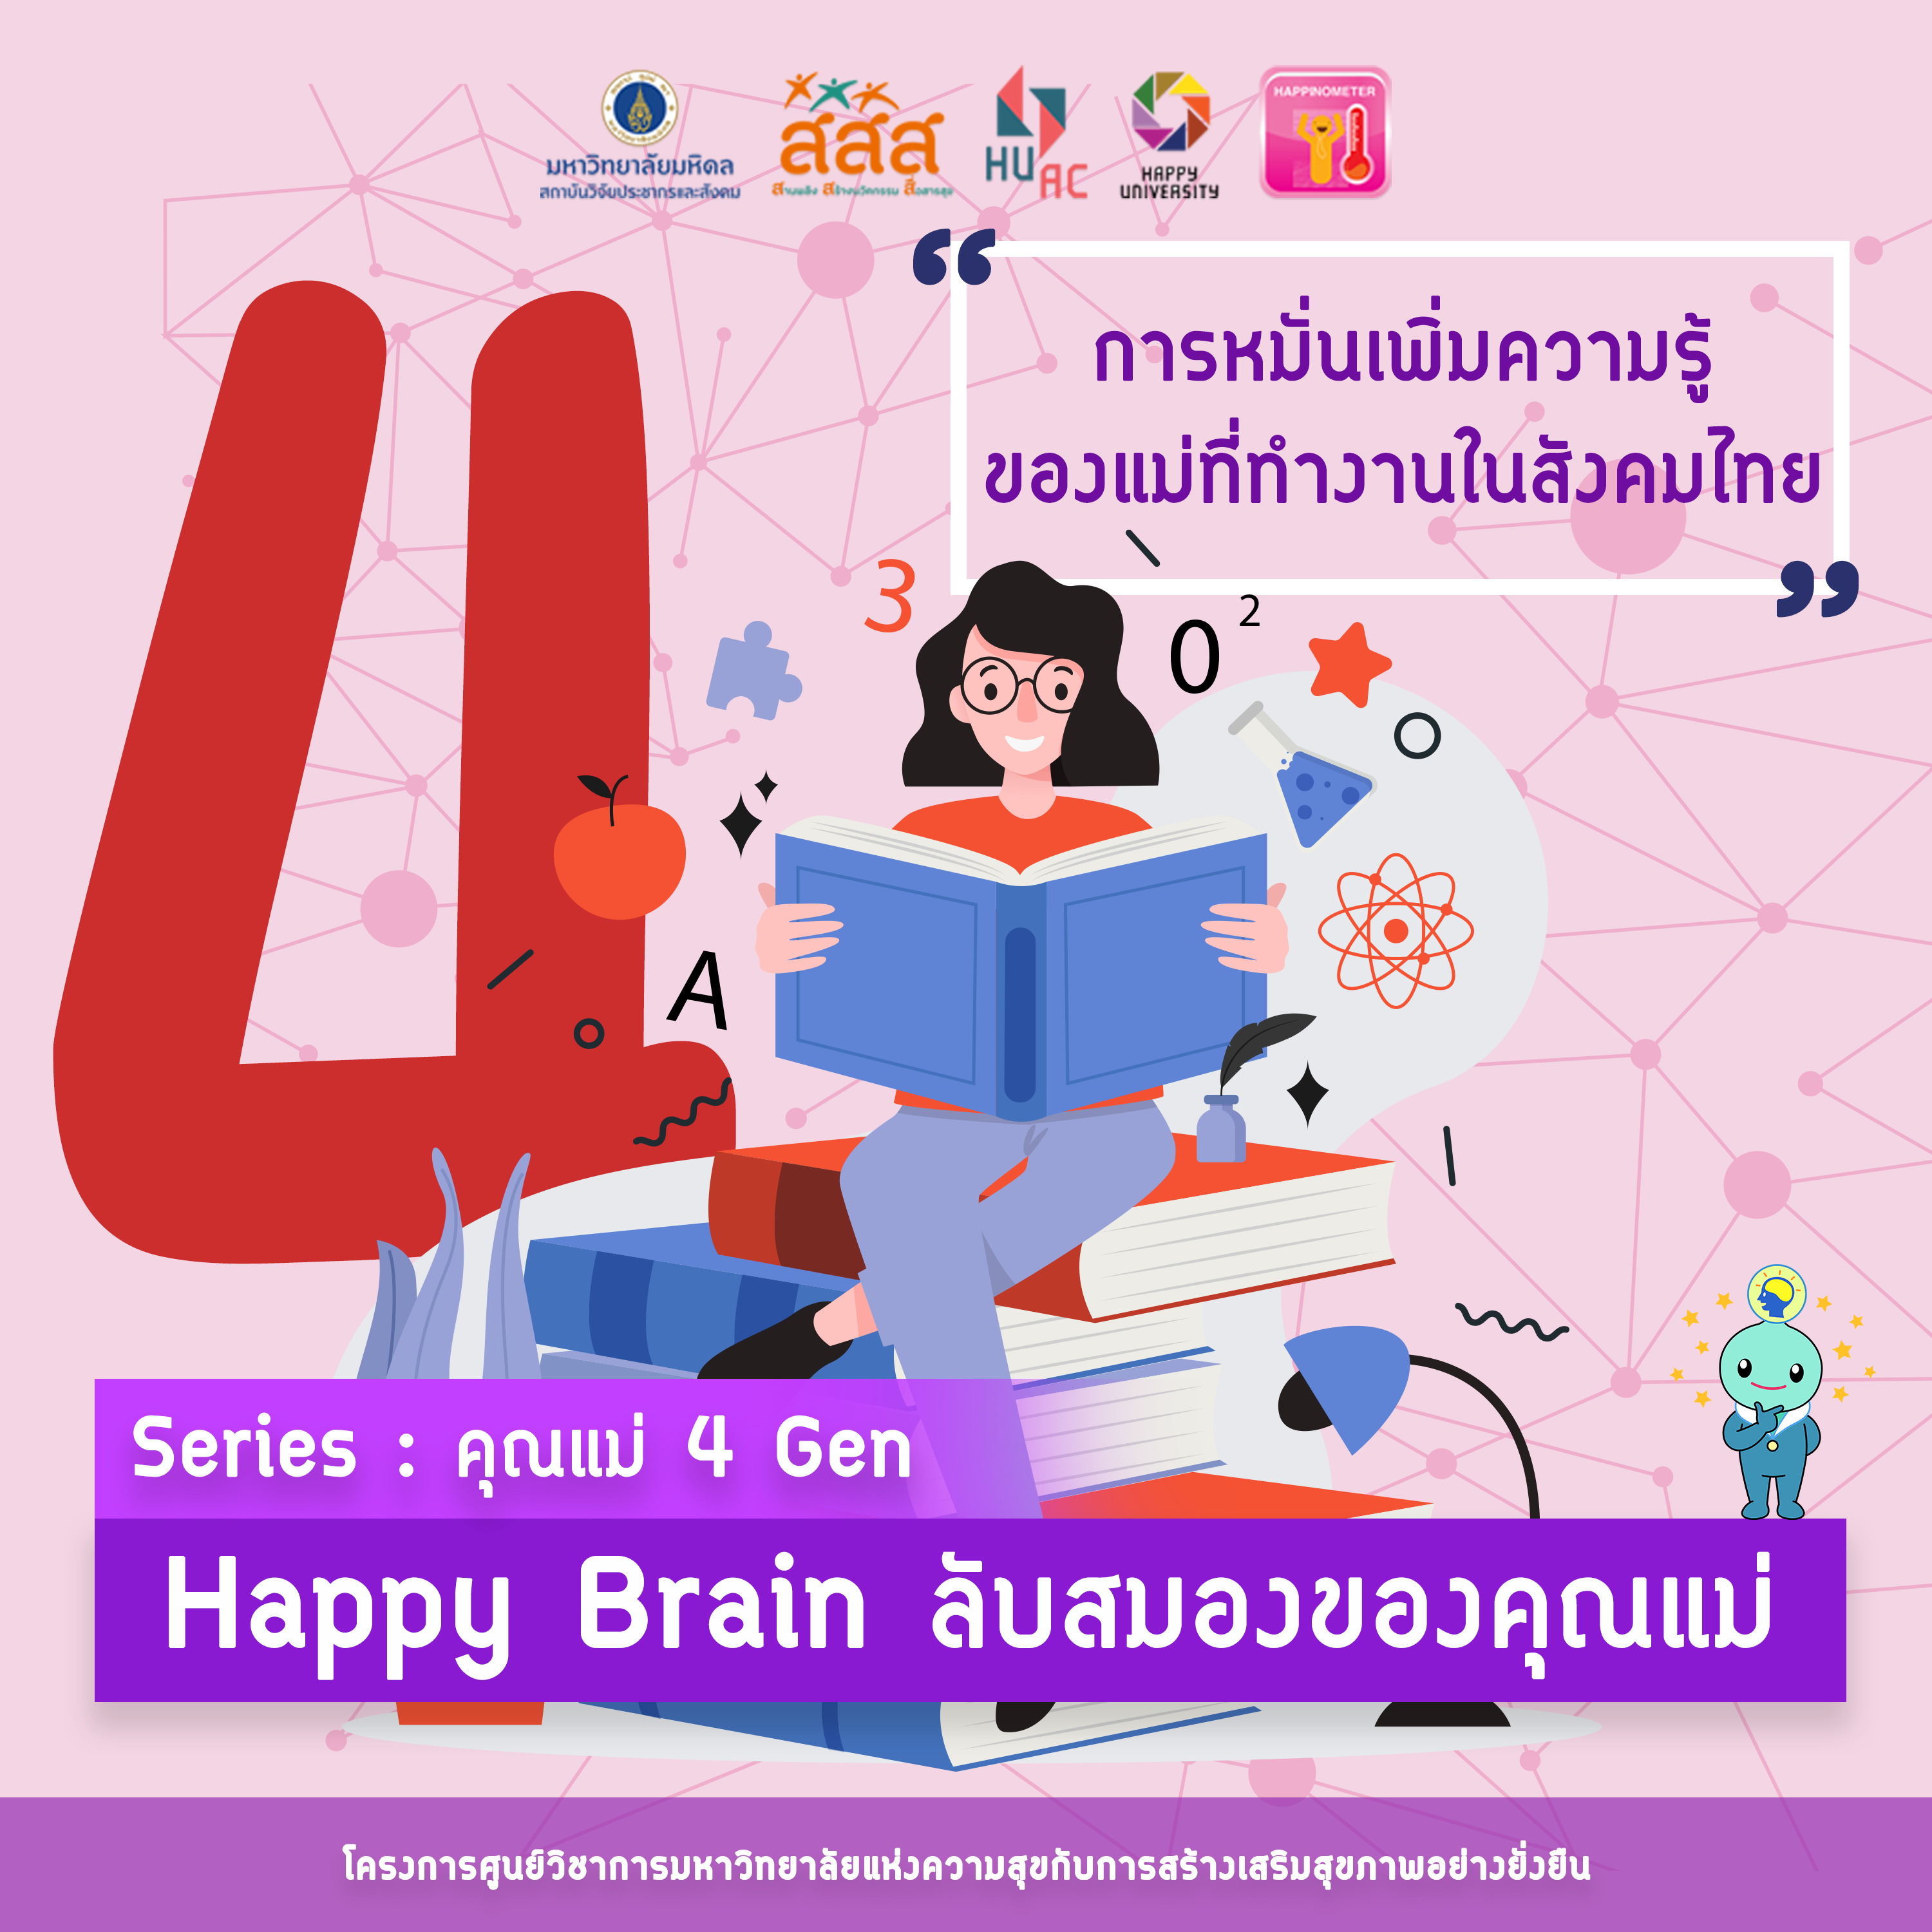 Series คุณแม่ 4 Gen EPISODE 4 : Happy Brain ลับสมองของคุณแม่